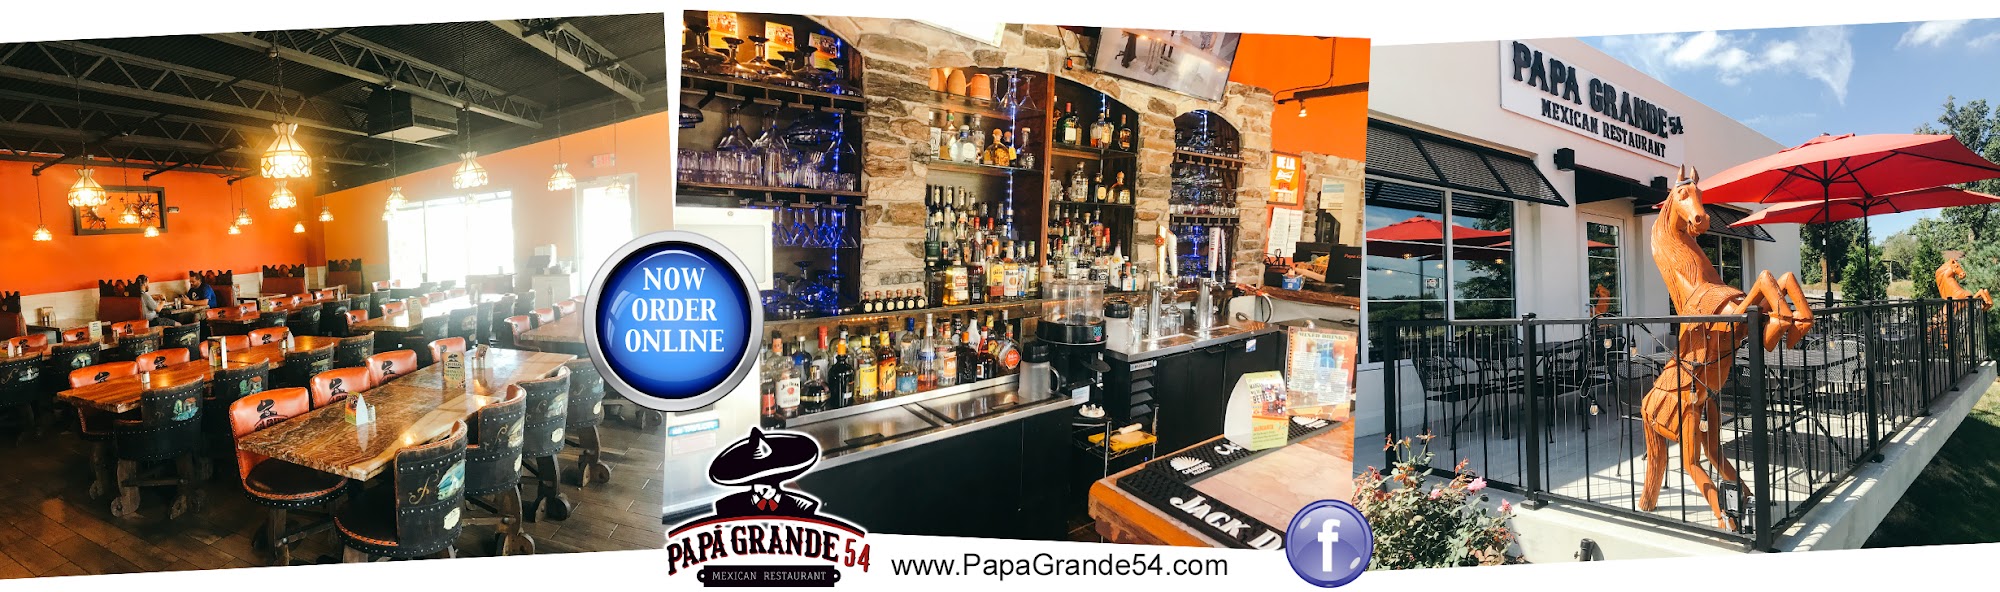 Papa Grande 54 Mexican Restaurant